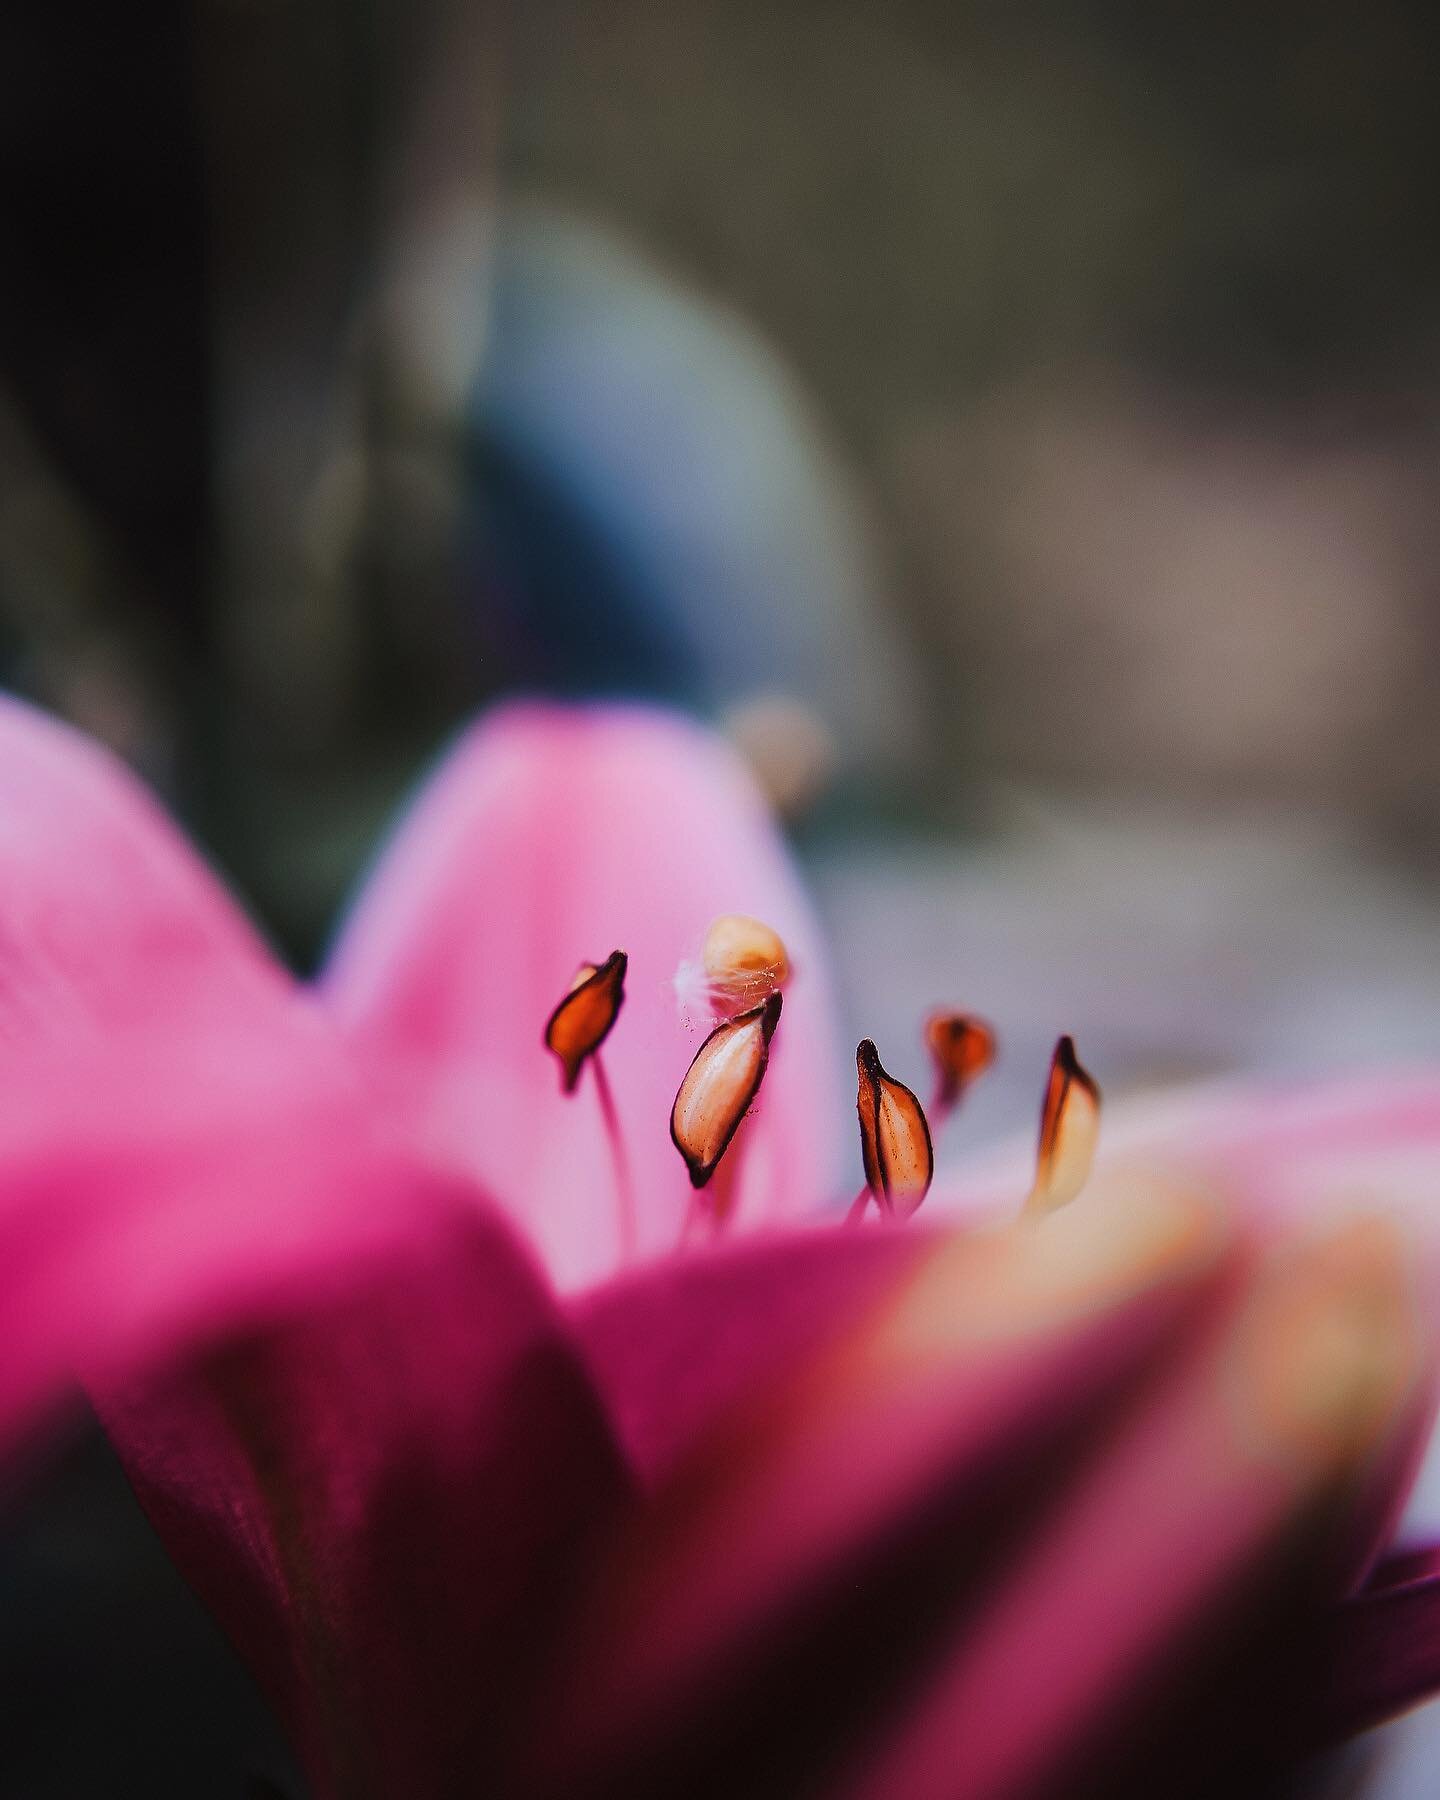 To those who do, thanks for loving me 💕
.
.
.
#monocarpic #flower #floral #botanical #dof #nature #mothernature #50mm #sunpak #lensfilters #macro #macroesque #macroish #blur #rebeccatillett #oklahoma #ruraloklahoma #tulsaphotographer #beggsoklahoma 